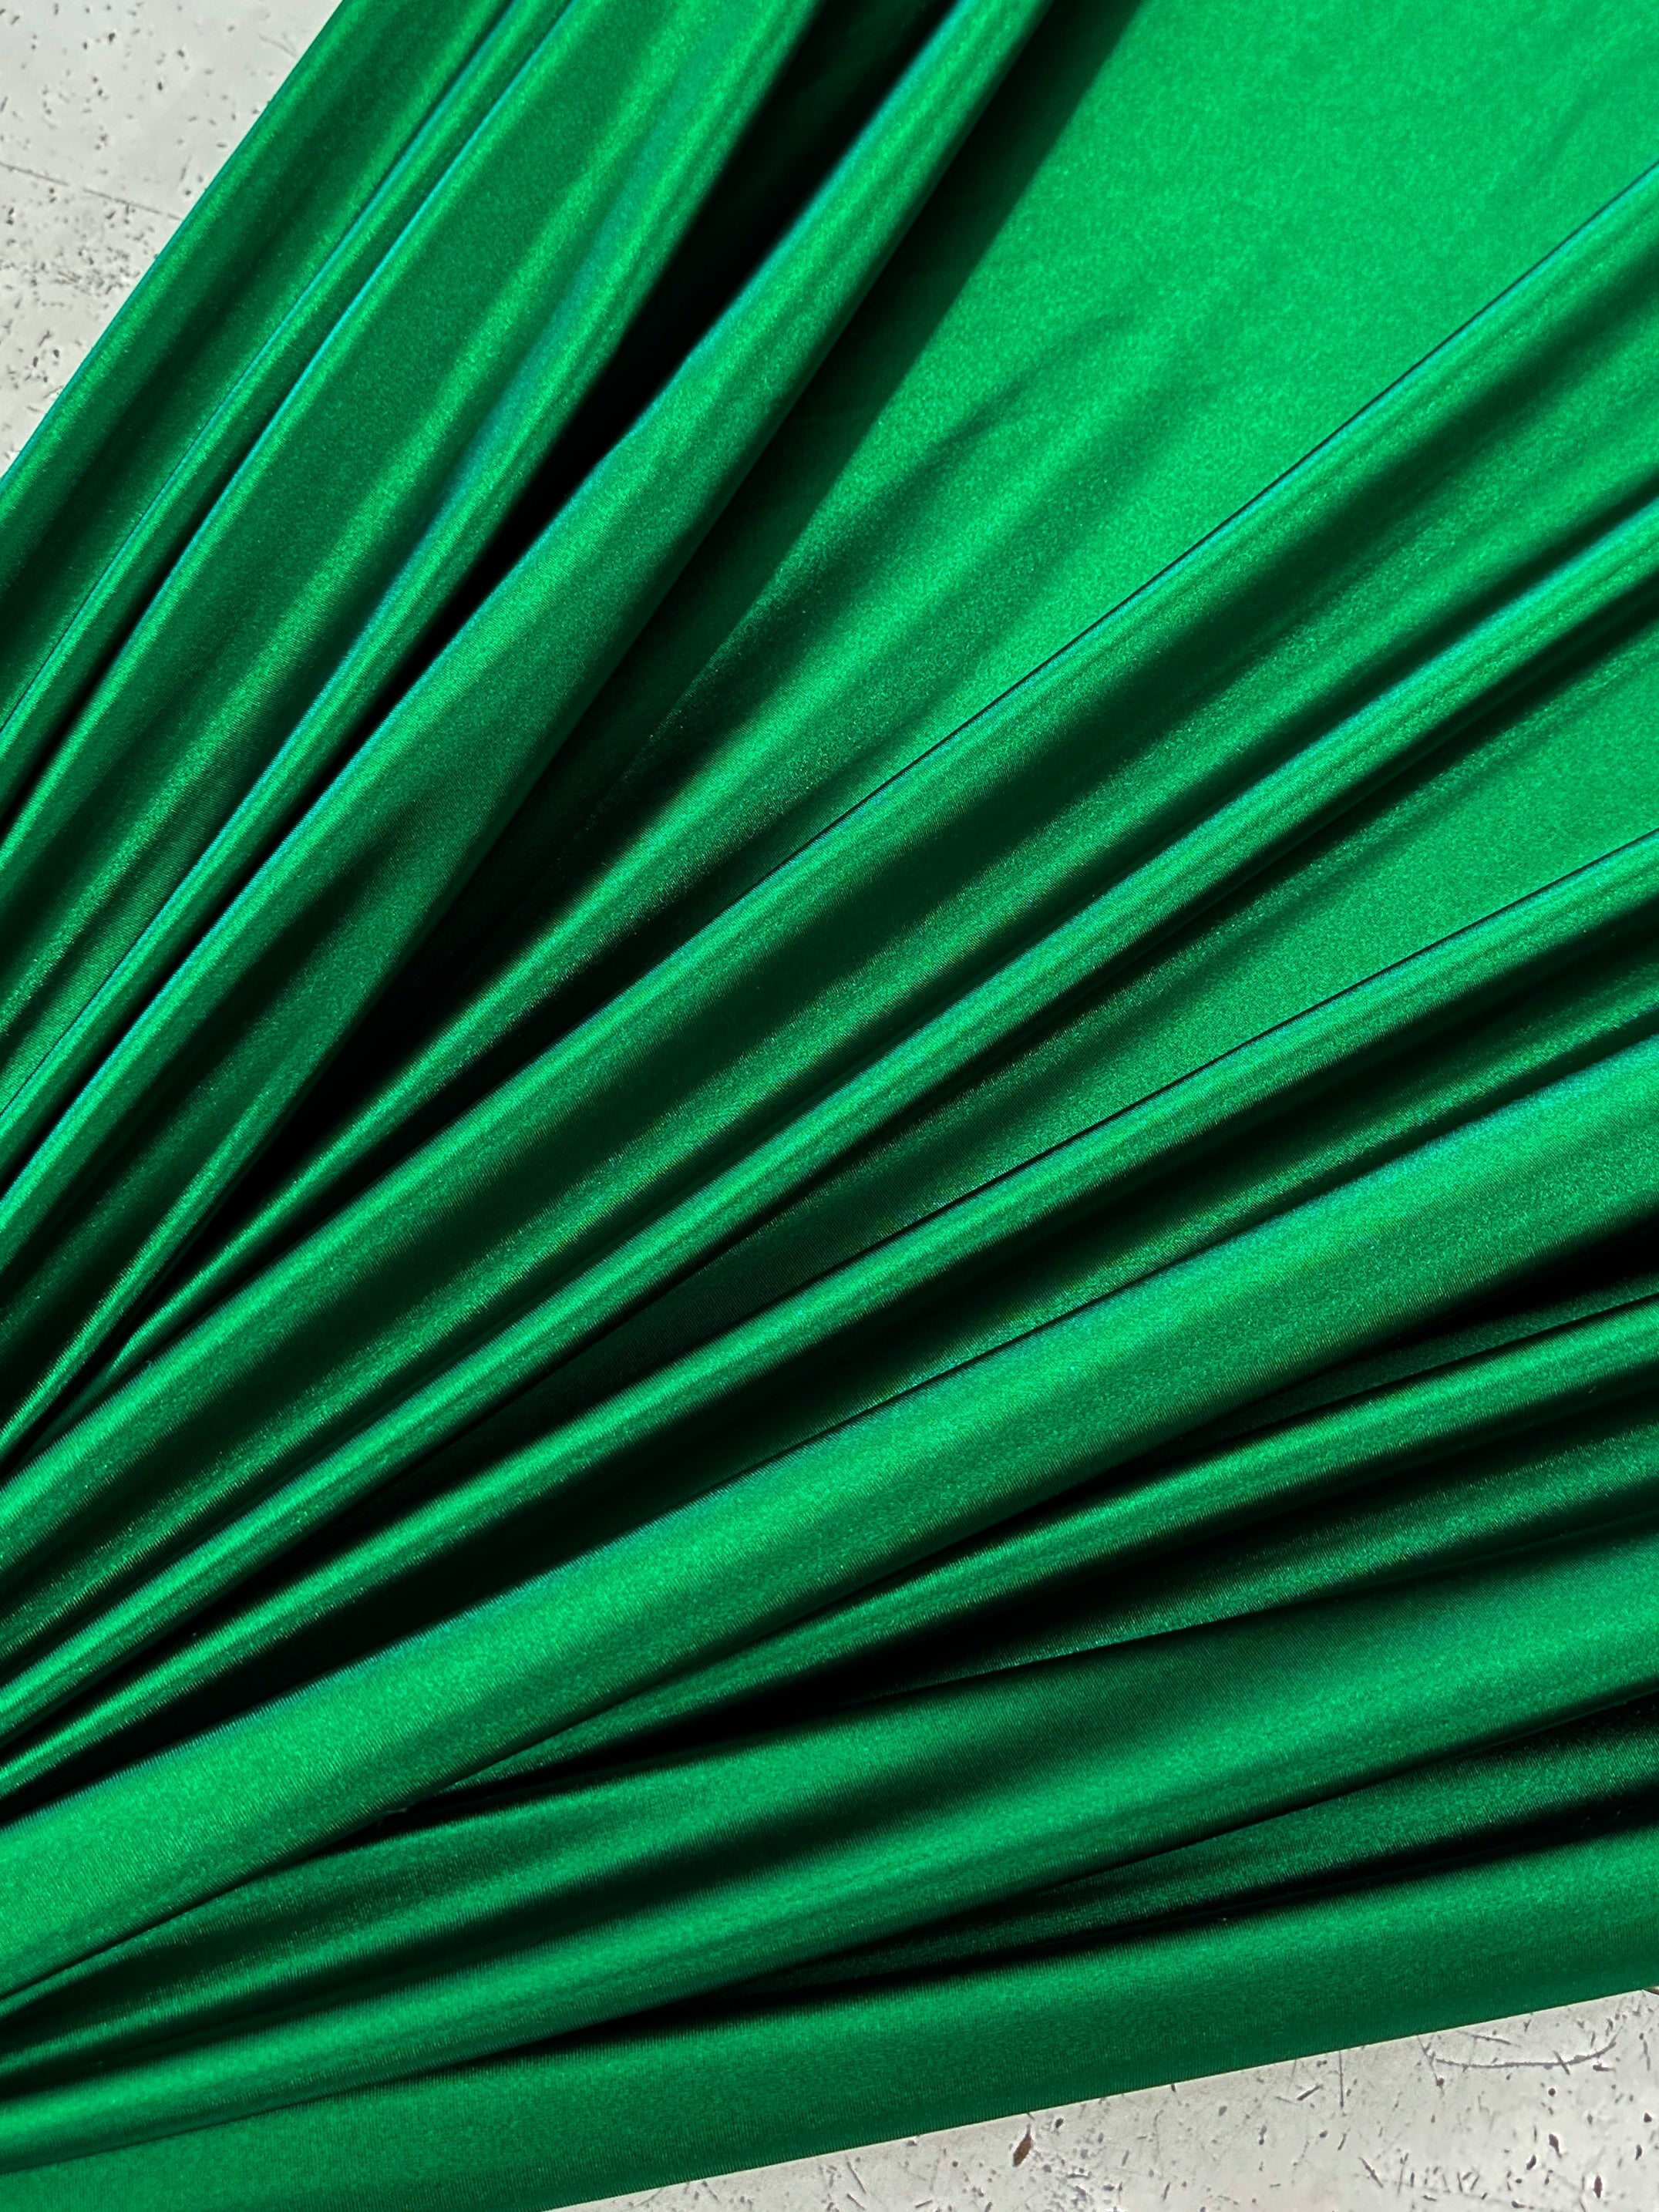 Sage Green Shiny Nylon Spandex, diamond green shiny nylon spandex, 4 Way Stretch nylon spandex, dark green nylon spandex, shiny nylon spandex for woman, shiny nylon for bride, spandex for swim wear, premium spandex, spandex on sale, low price spandex